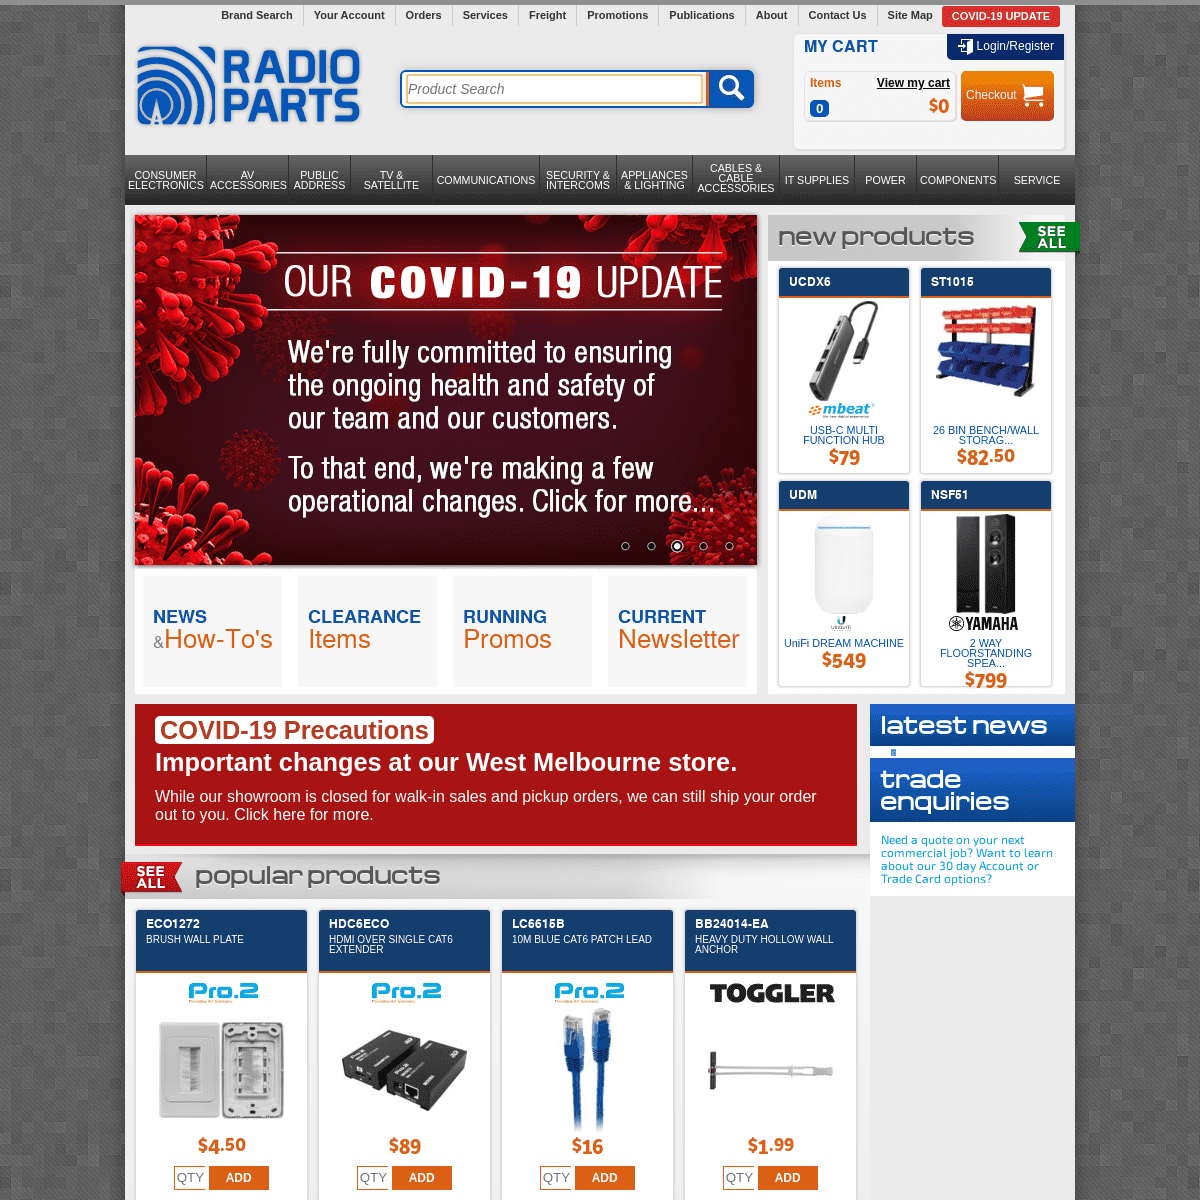 A complete backup of radioparts.com.au